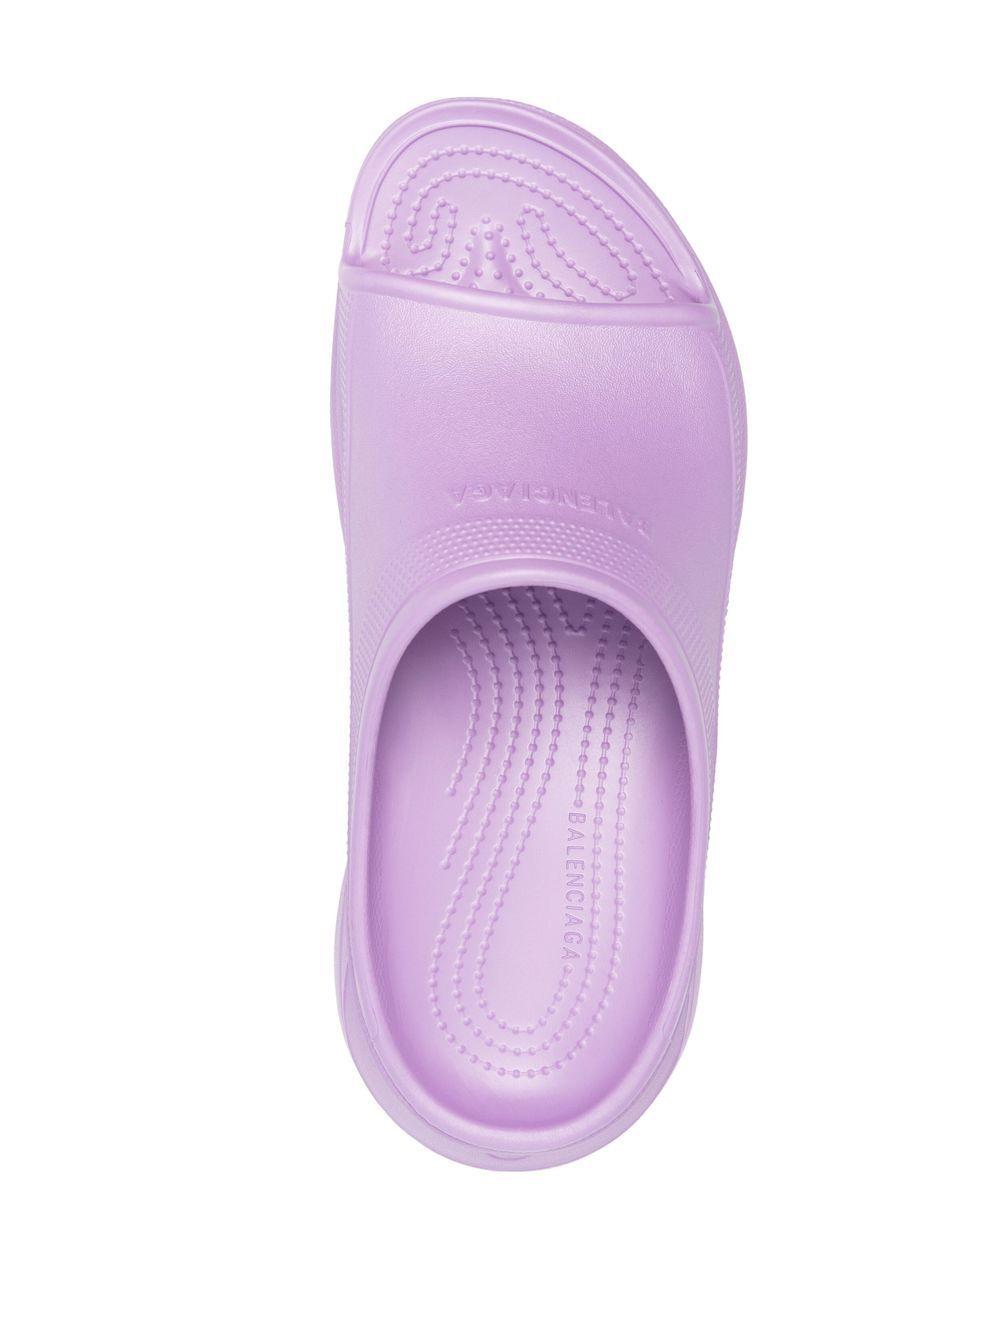 Balenciaga X Crocs Pool Crocs Platform Sandals in Purple | Lyst